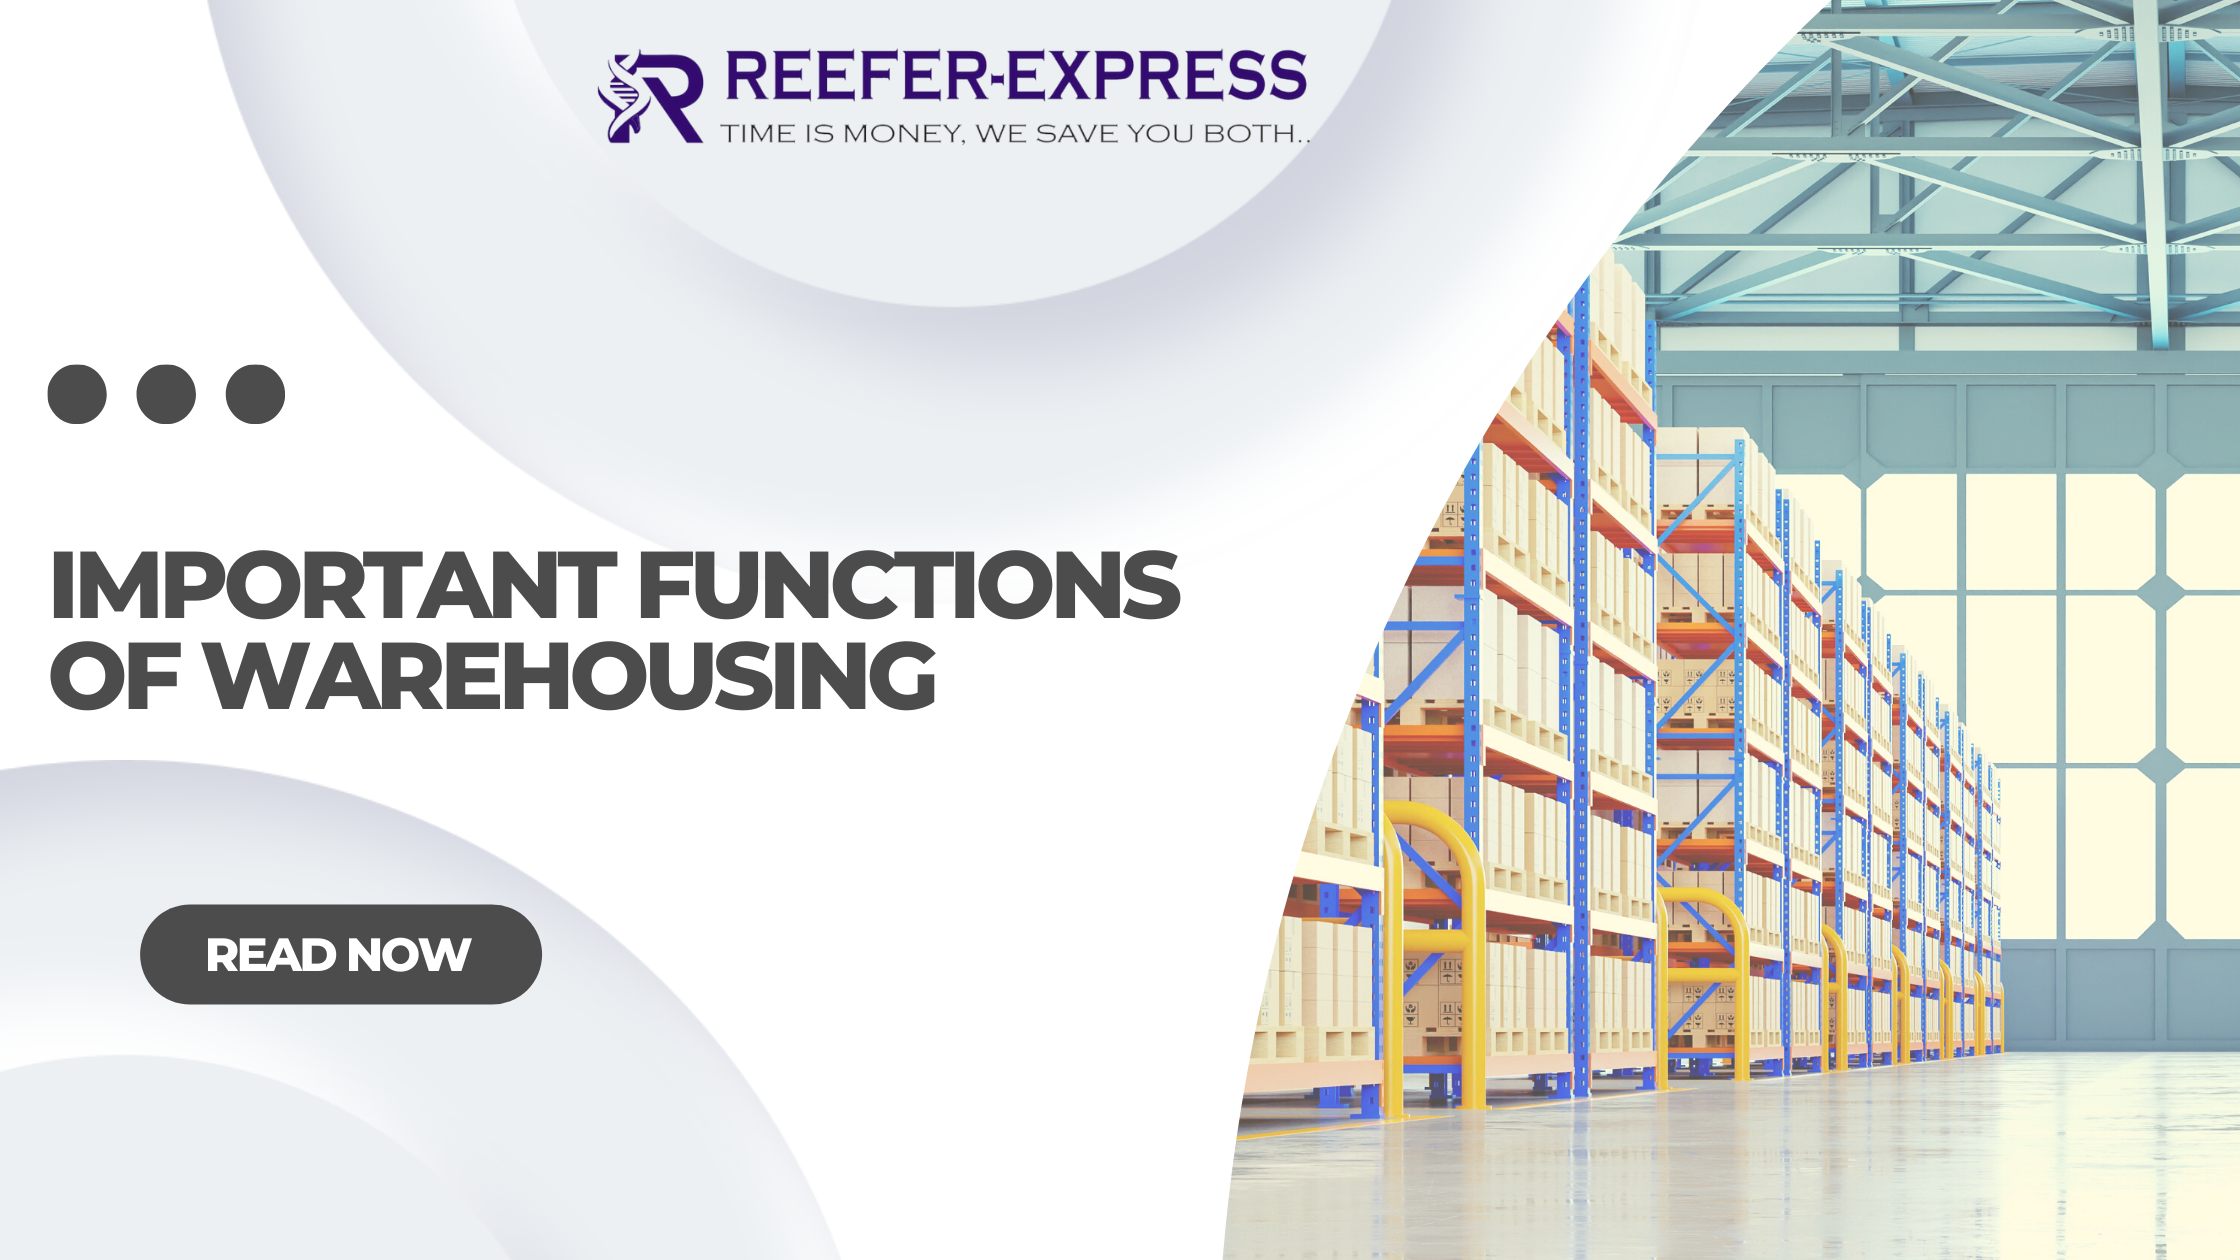 Function of warehousing